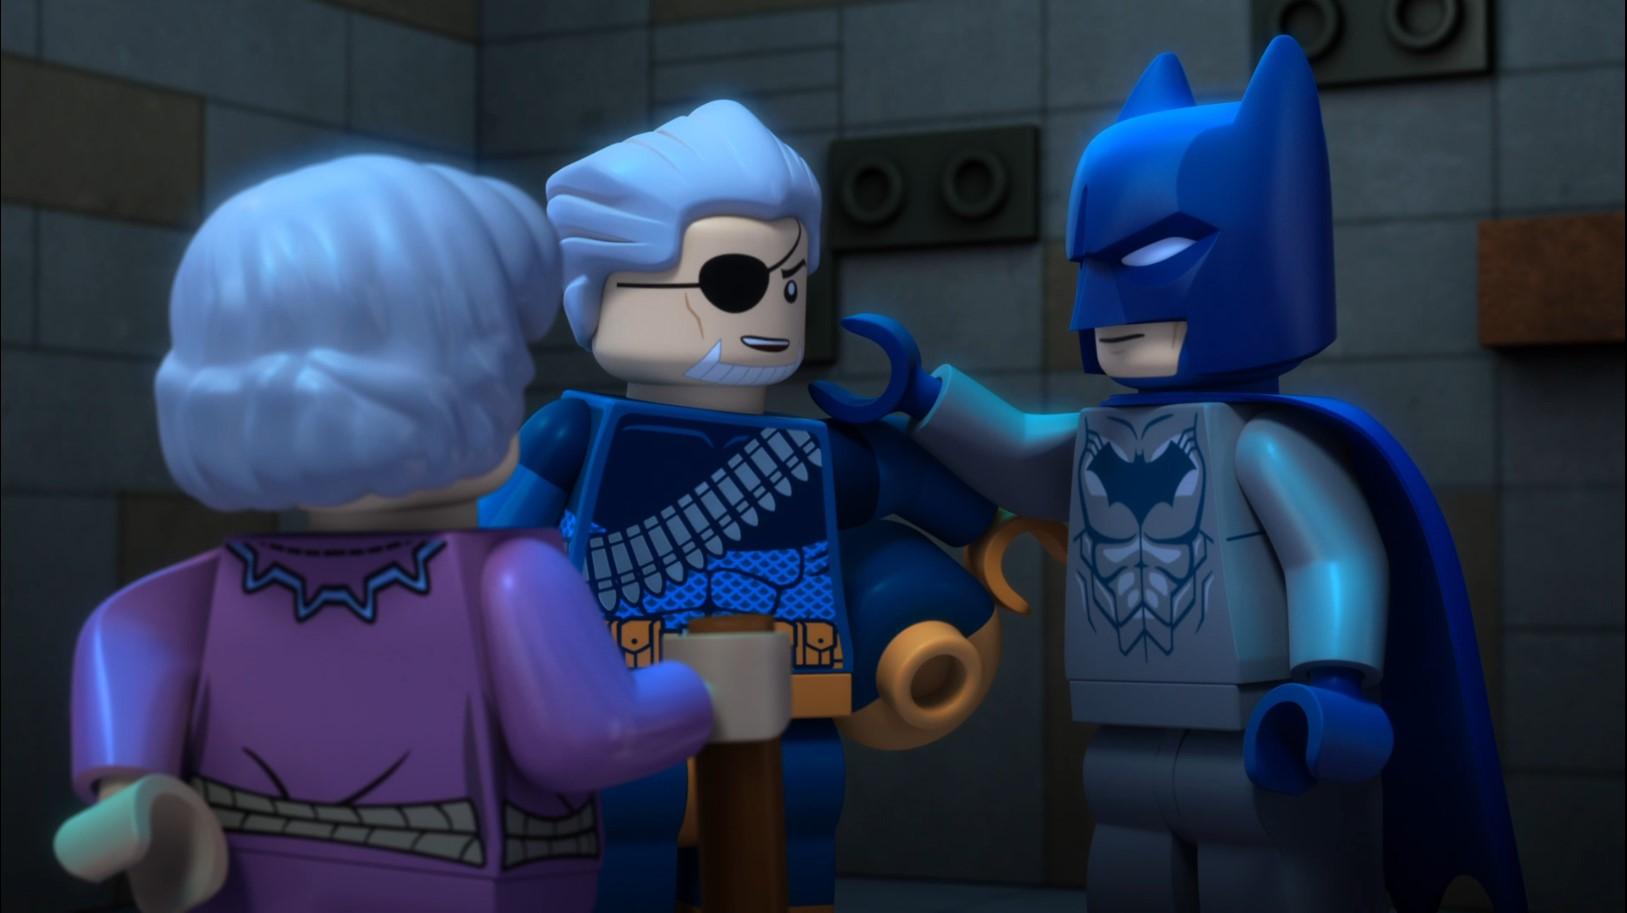 LEGO супергерои DC: Лига справедливости — Прорыв Готэм-сити